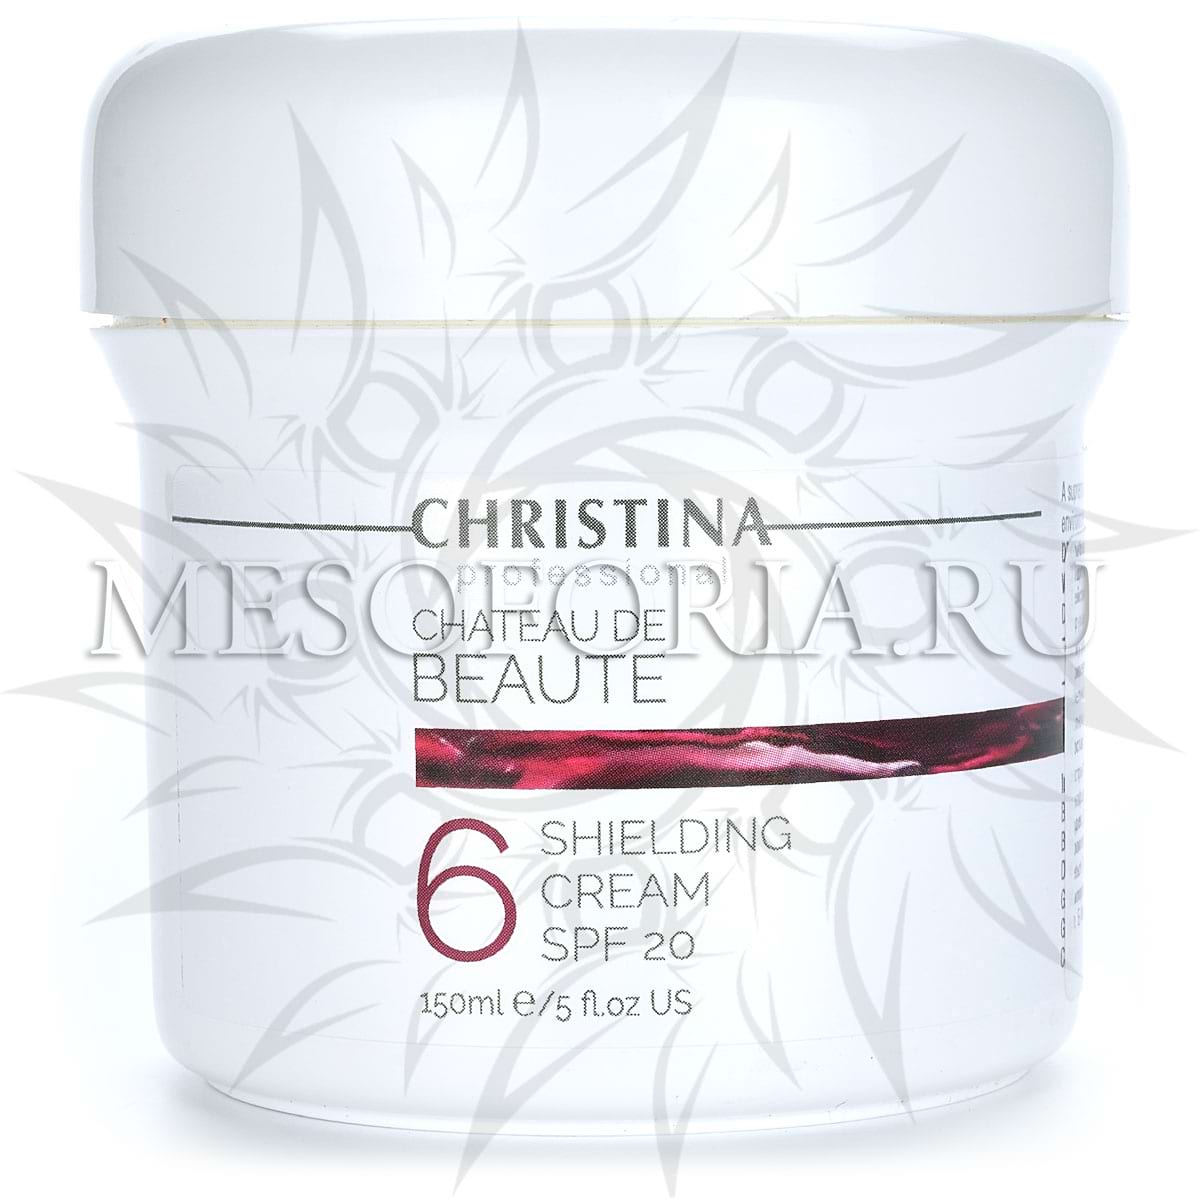 Защитный крем СПФ 20 (шаг 6) / Shielding Cream SPF 20, Chateau De Beaute, Christina (Кристина) – 150 мл